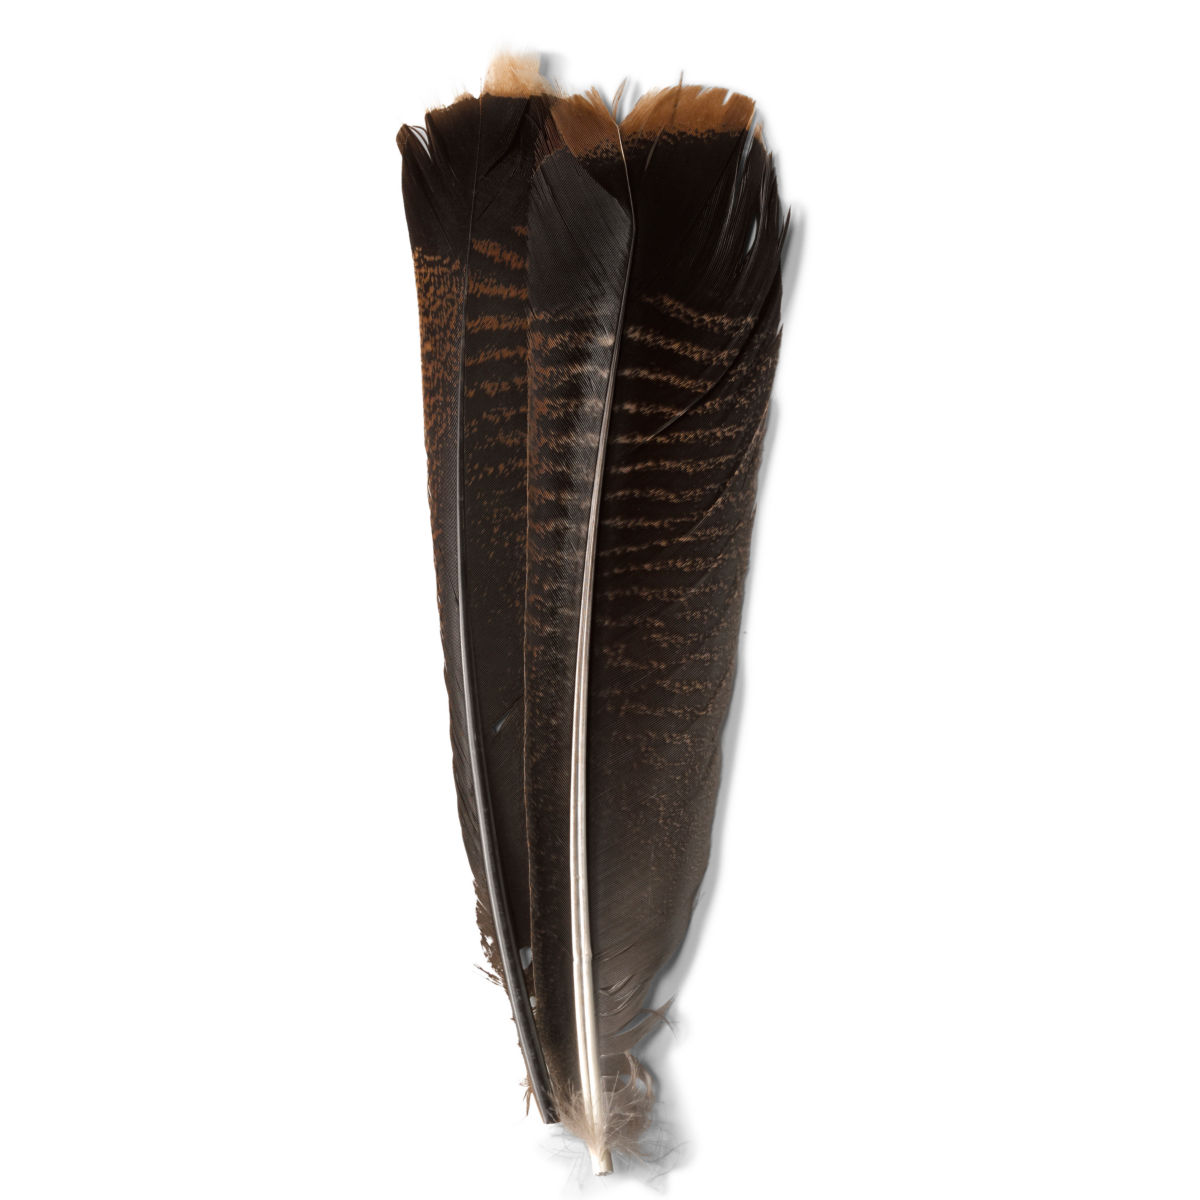 Mottled Turkey Feathers - DARKimage number 0